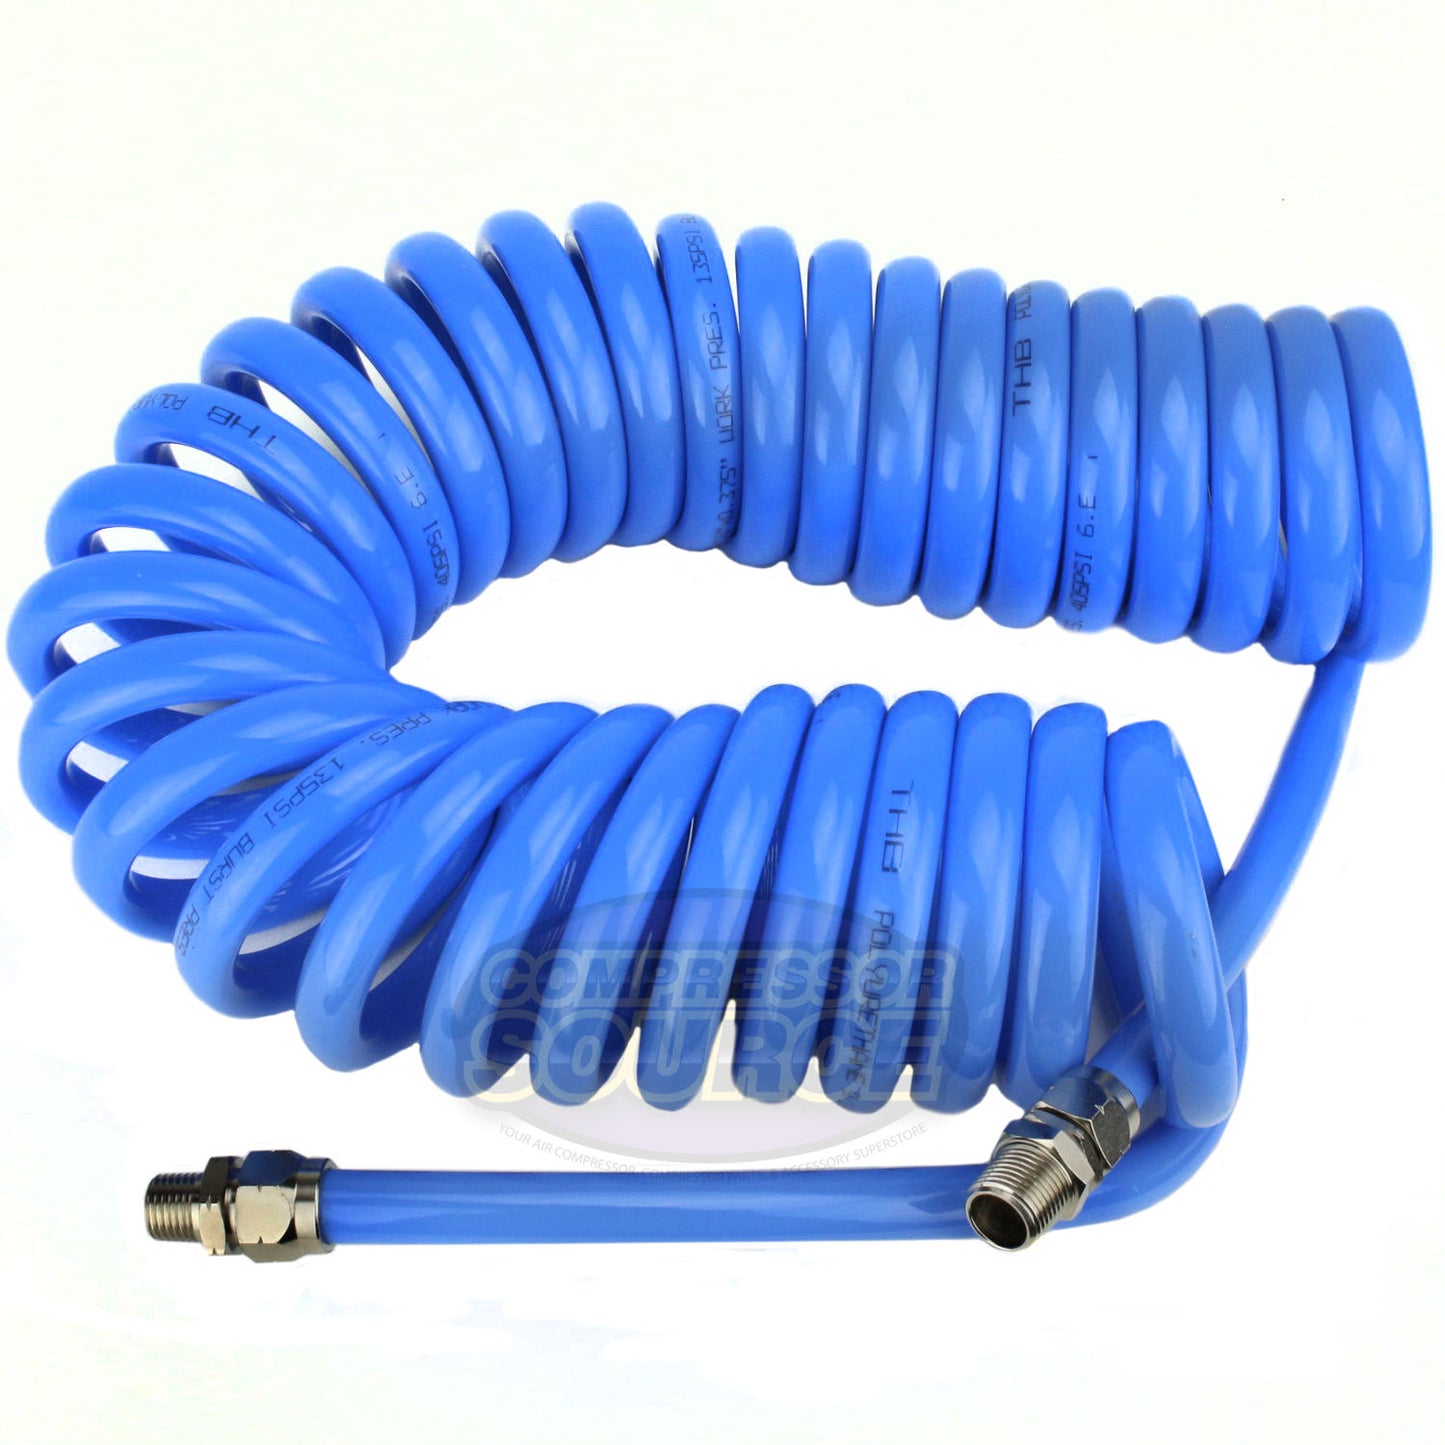 Premium 1/4" x 25' Air Compressor Coil Hose Spiral Polyurethane With Swivel Ends Blue